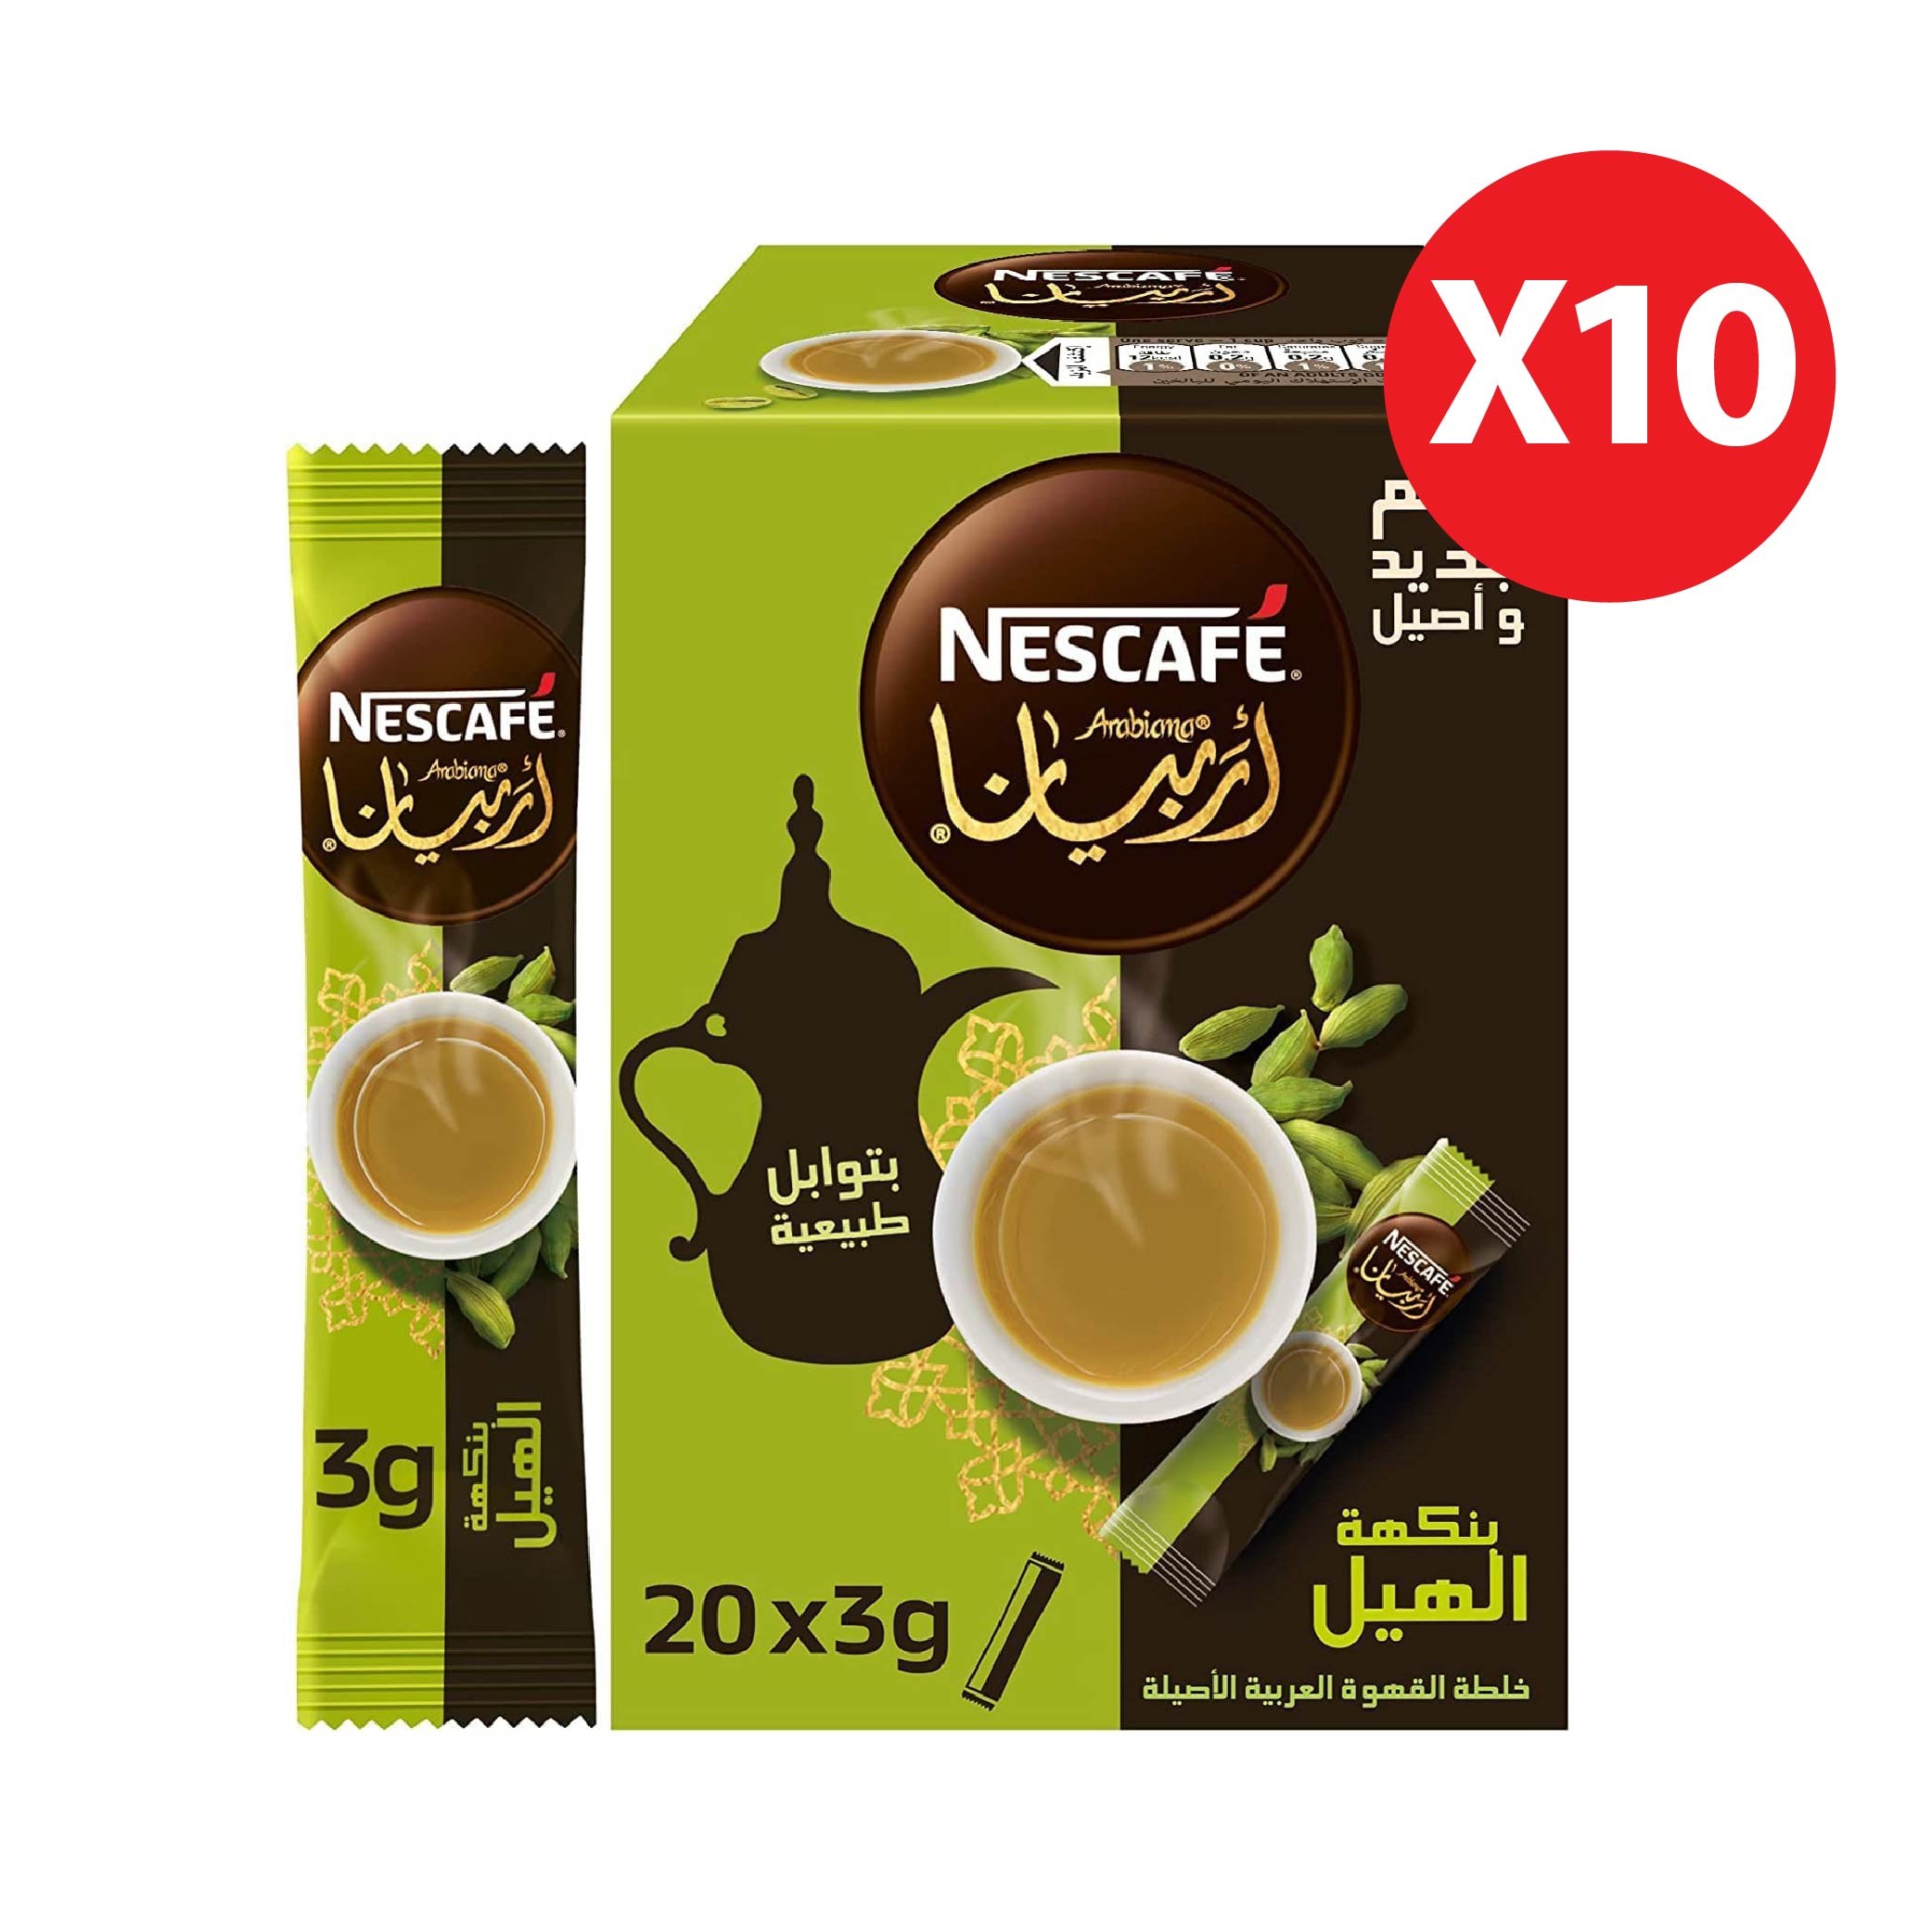  Nestle Nescafe Cinnamon Flavored Arabic Coffee - 20 sticks, 10 packs.